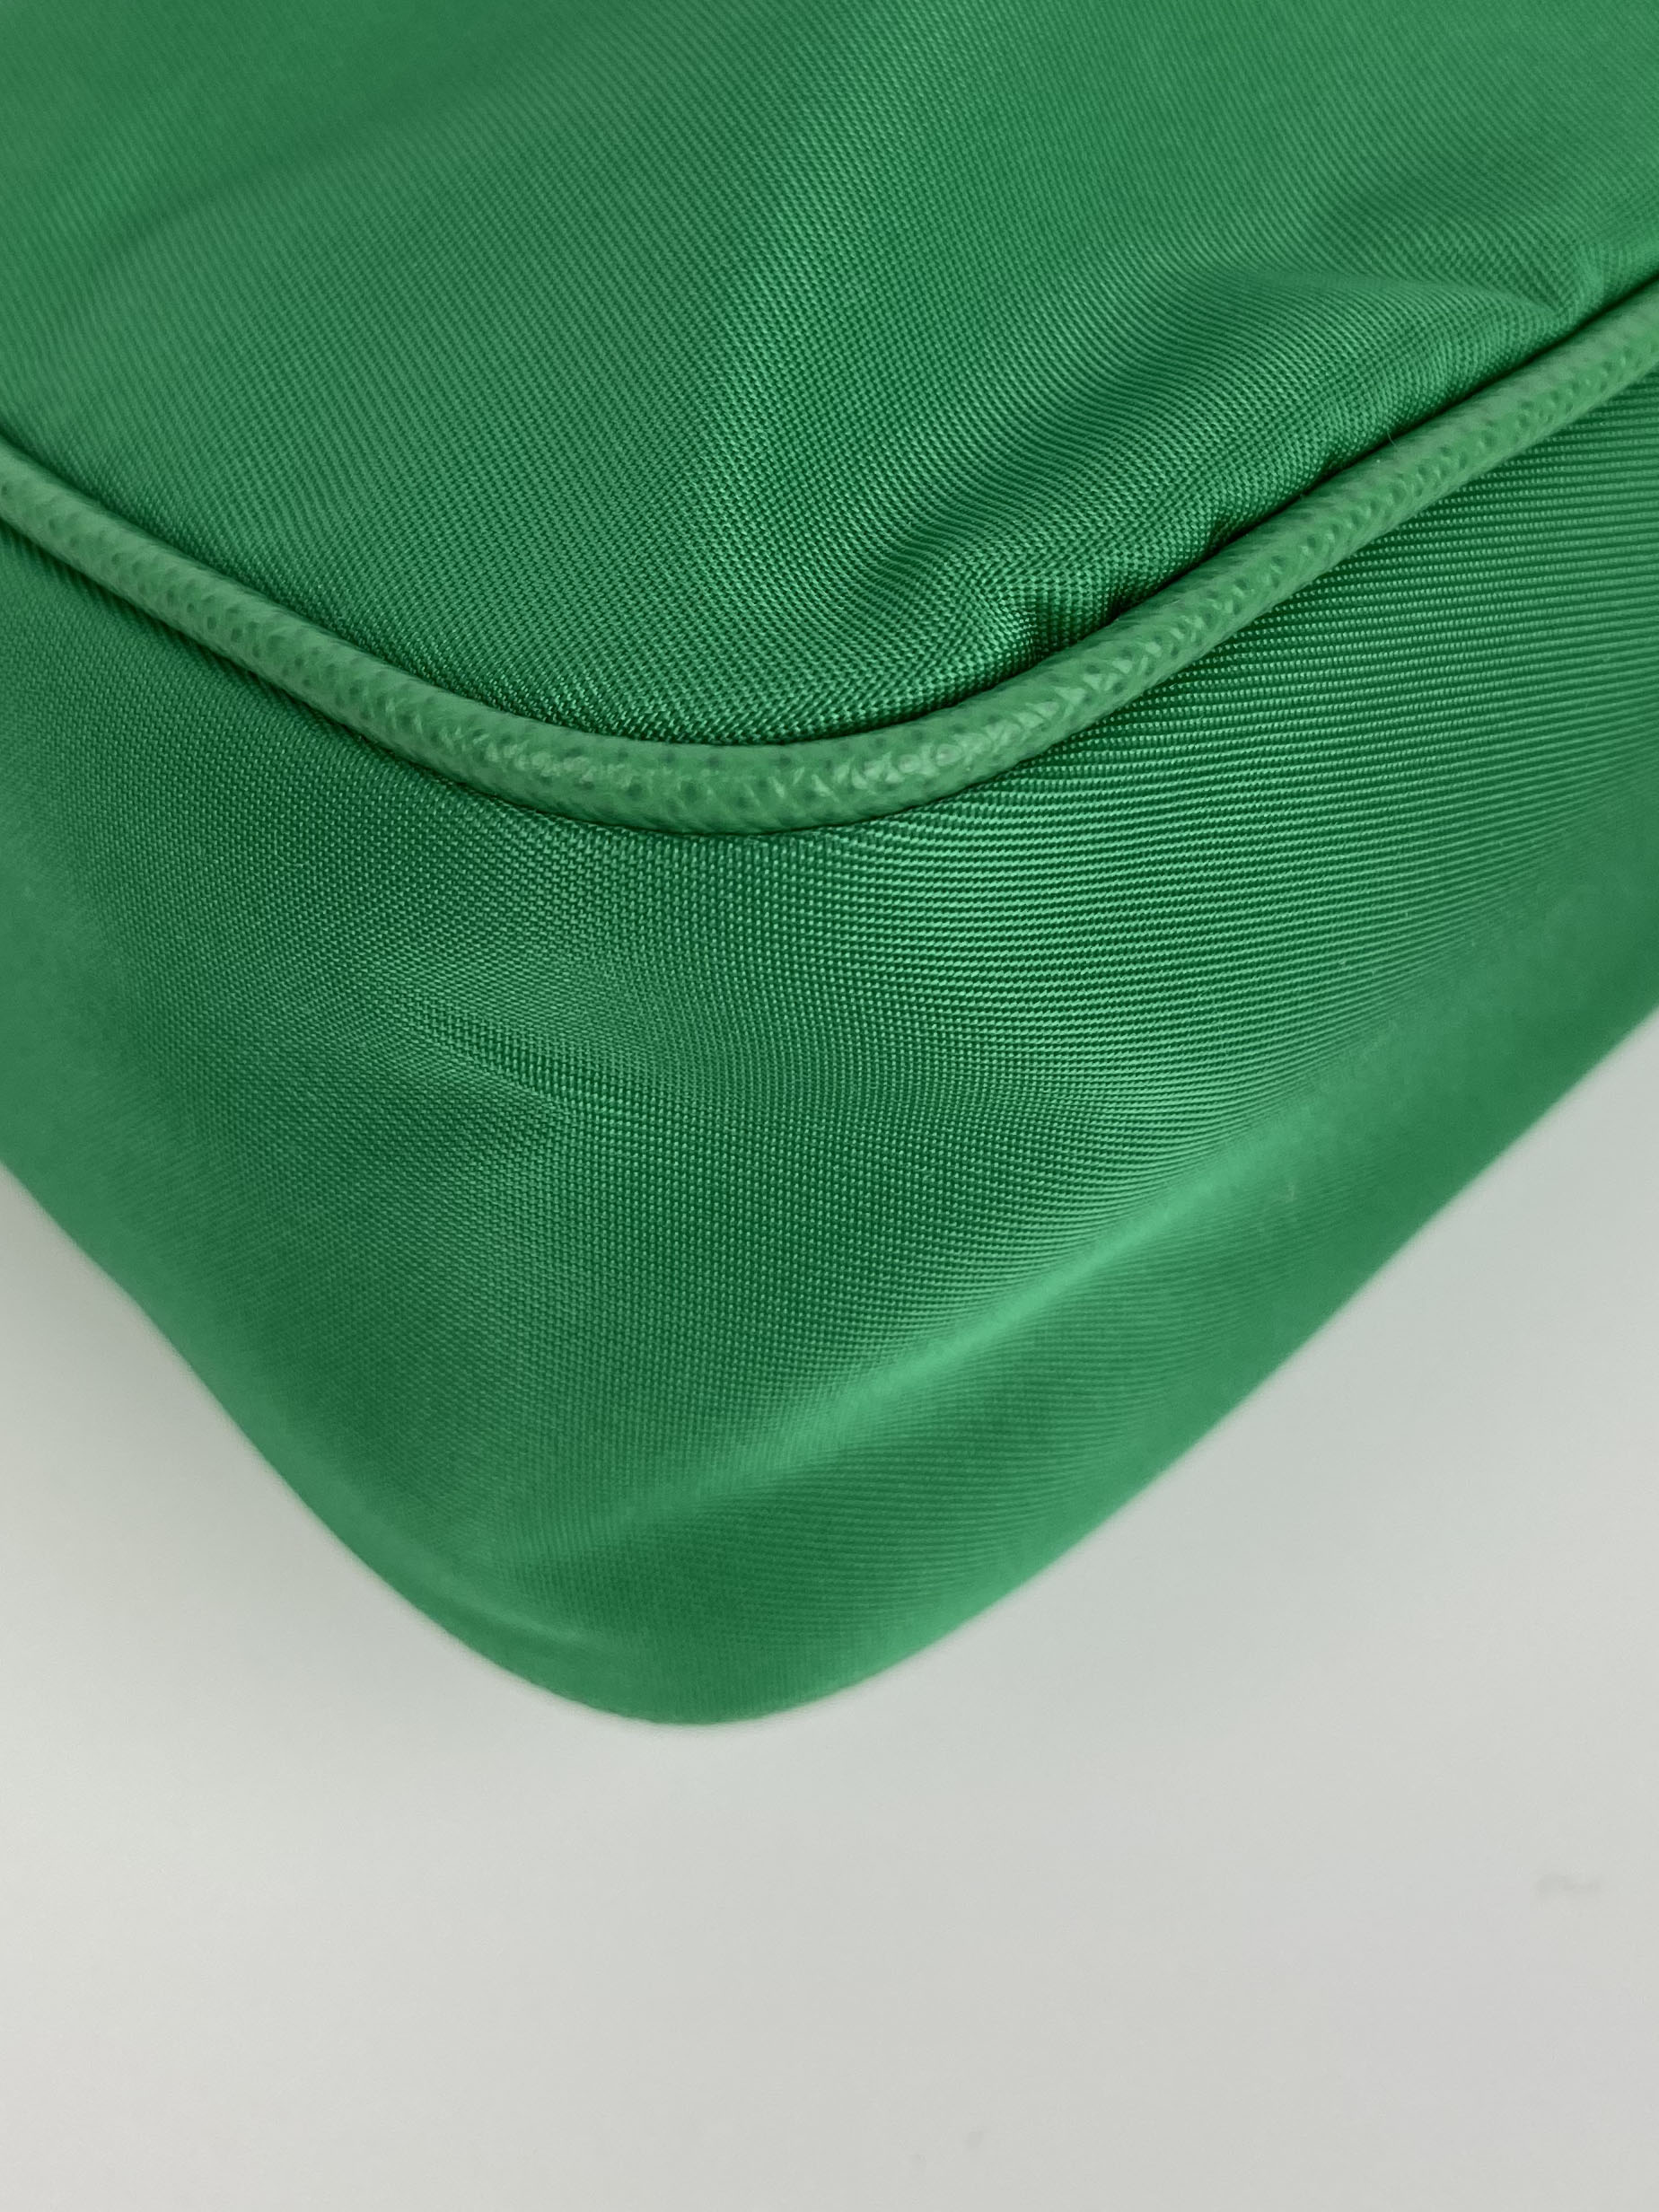 Prada Green Re-edition 2005 Re-nylon Bag